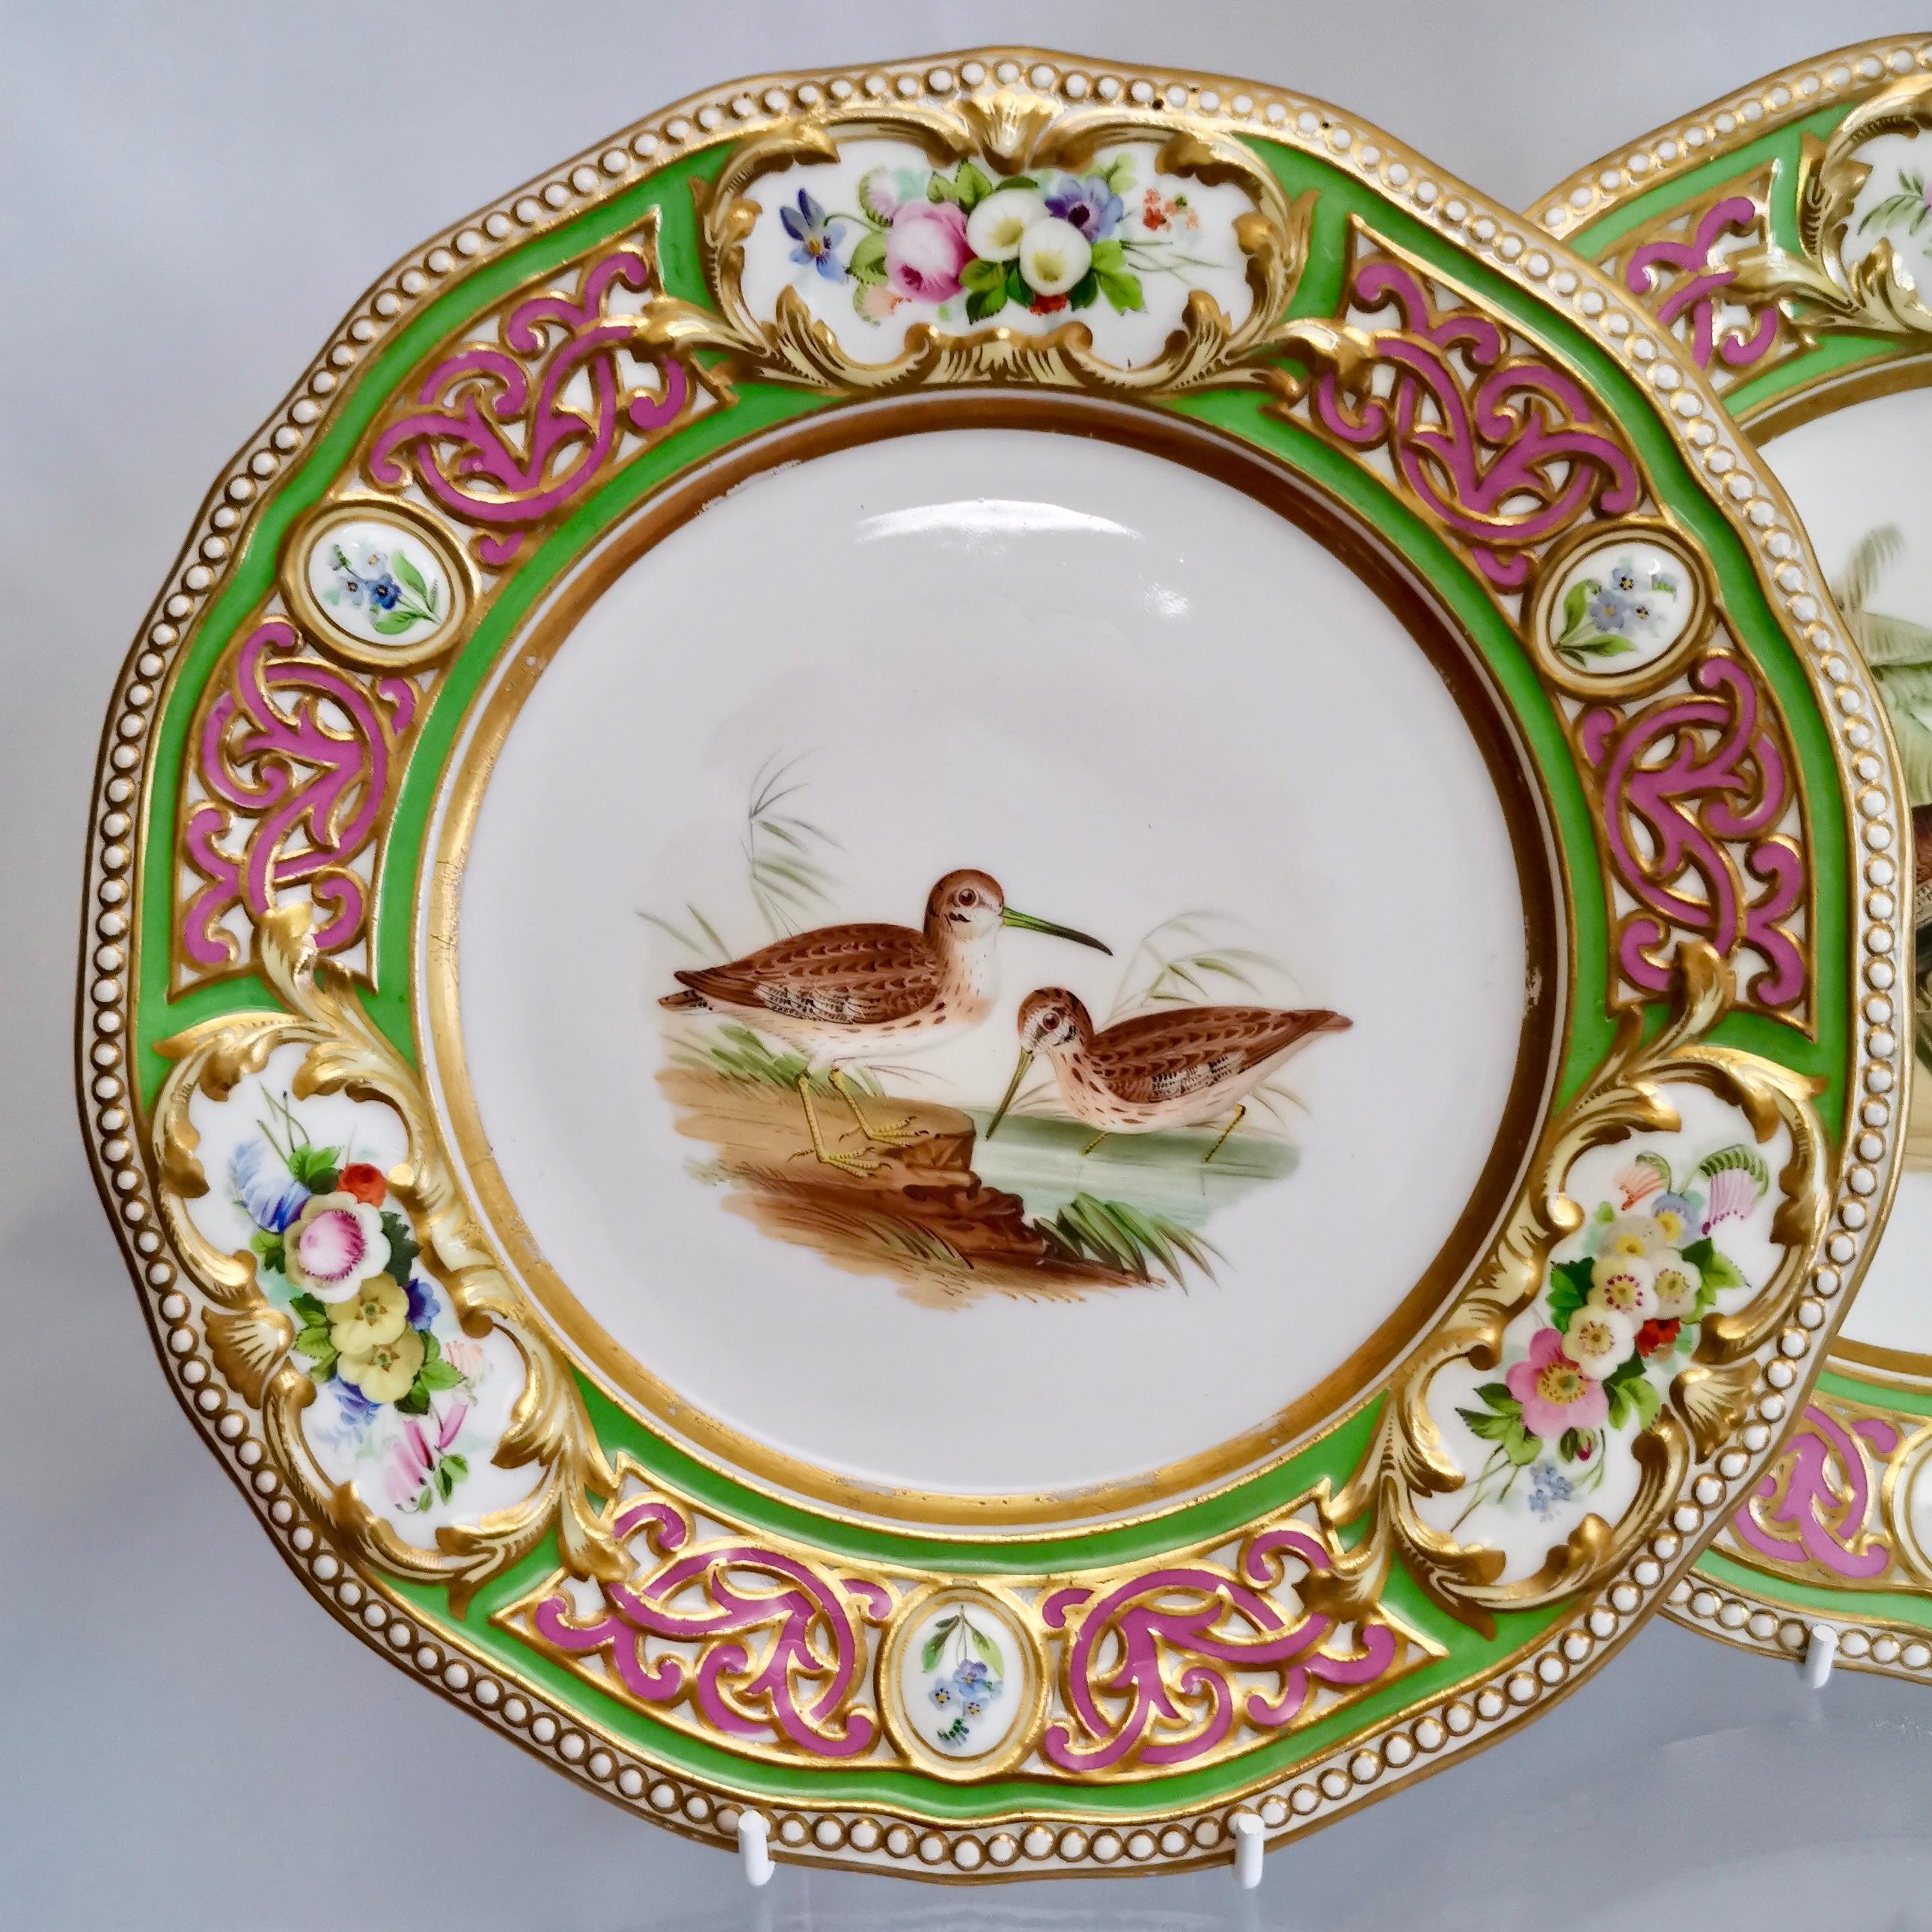 Grainger Worcester Porcelain Dessert Service, Persian Revival with Birds, 1855 5